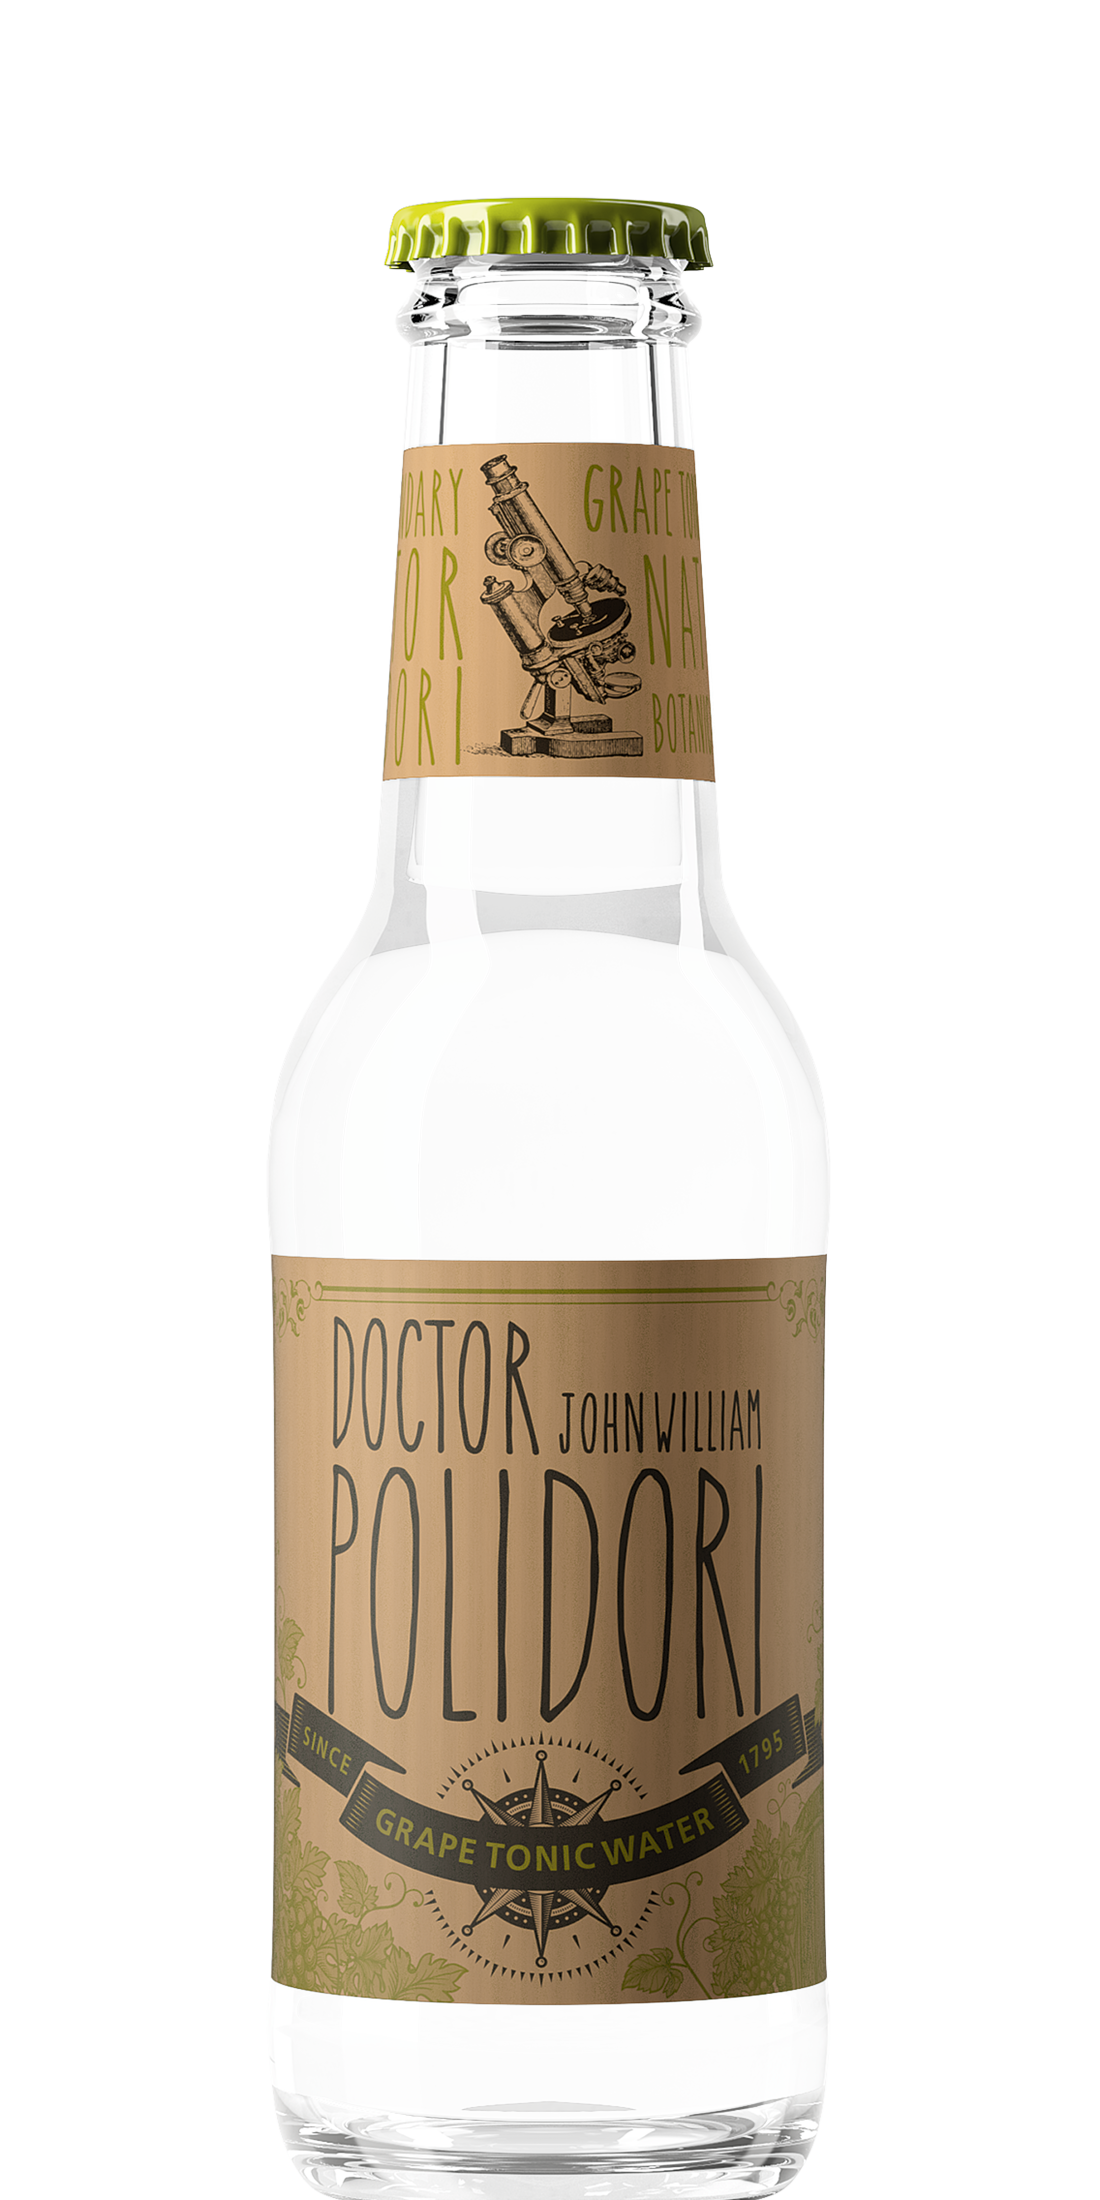 Doctor-Polidori-Grape-Tonic-Water-200ml-2200h.png